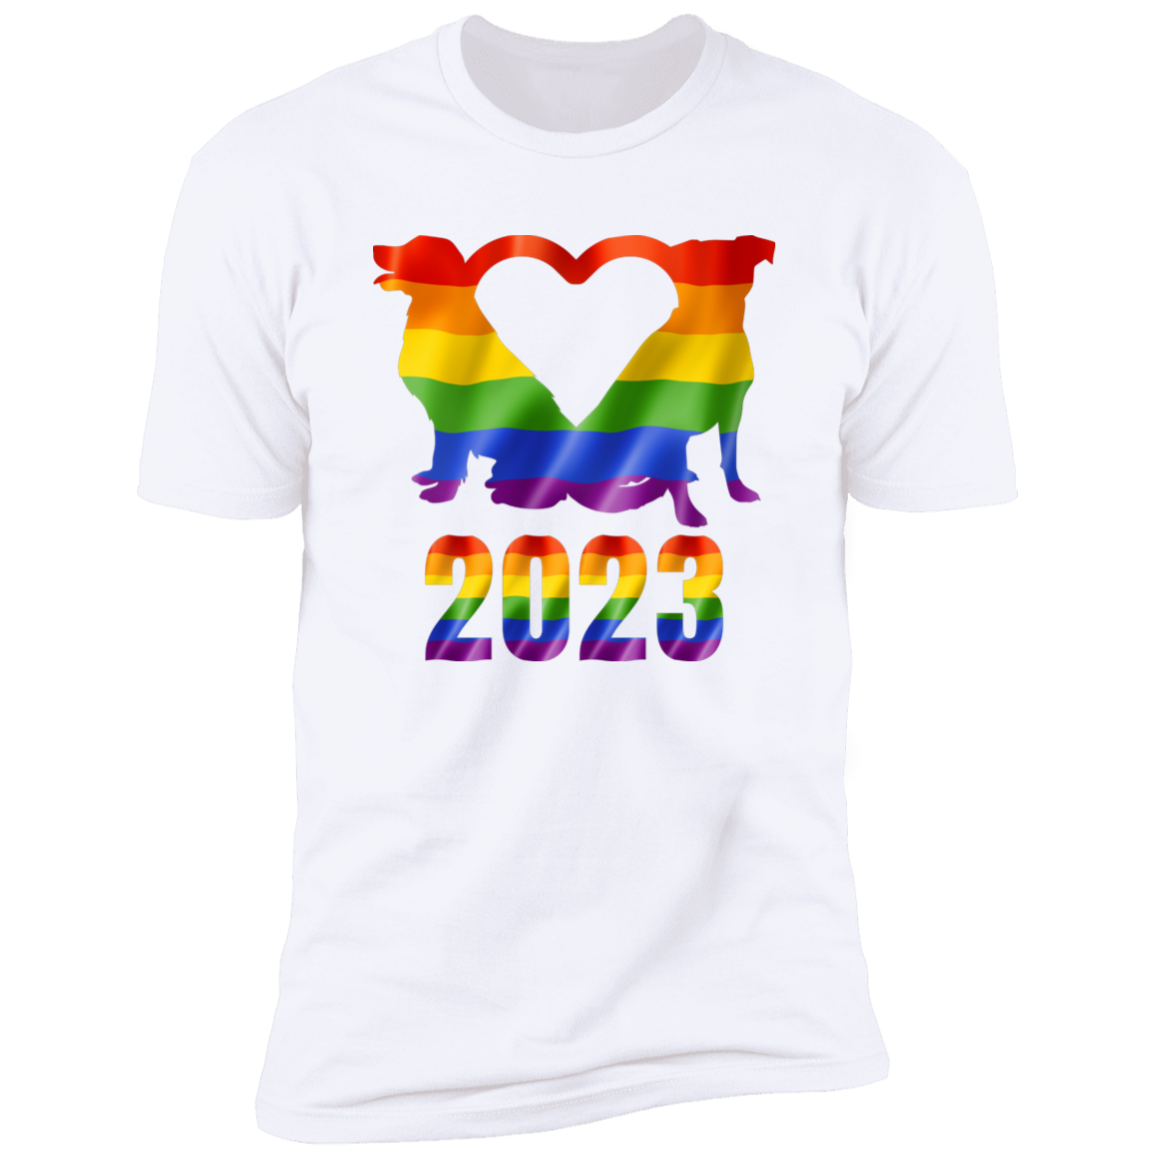 Dog Pride 2023, dog pride dog shirt for humans, in white